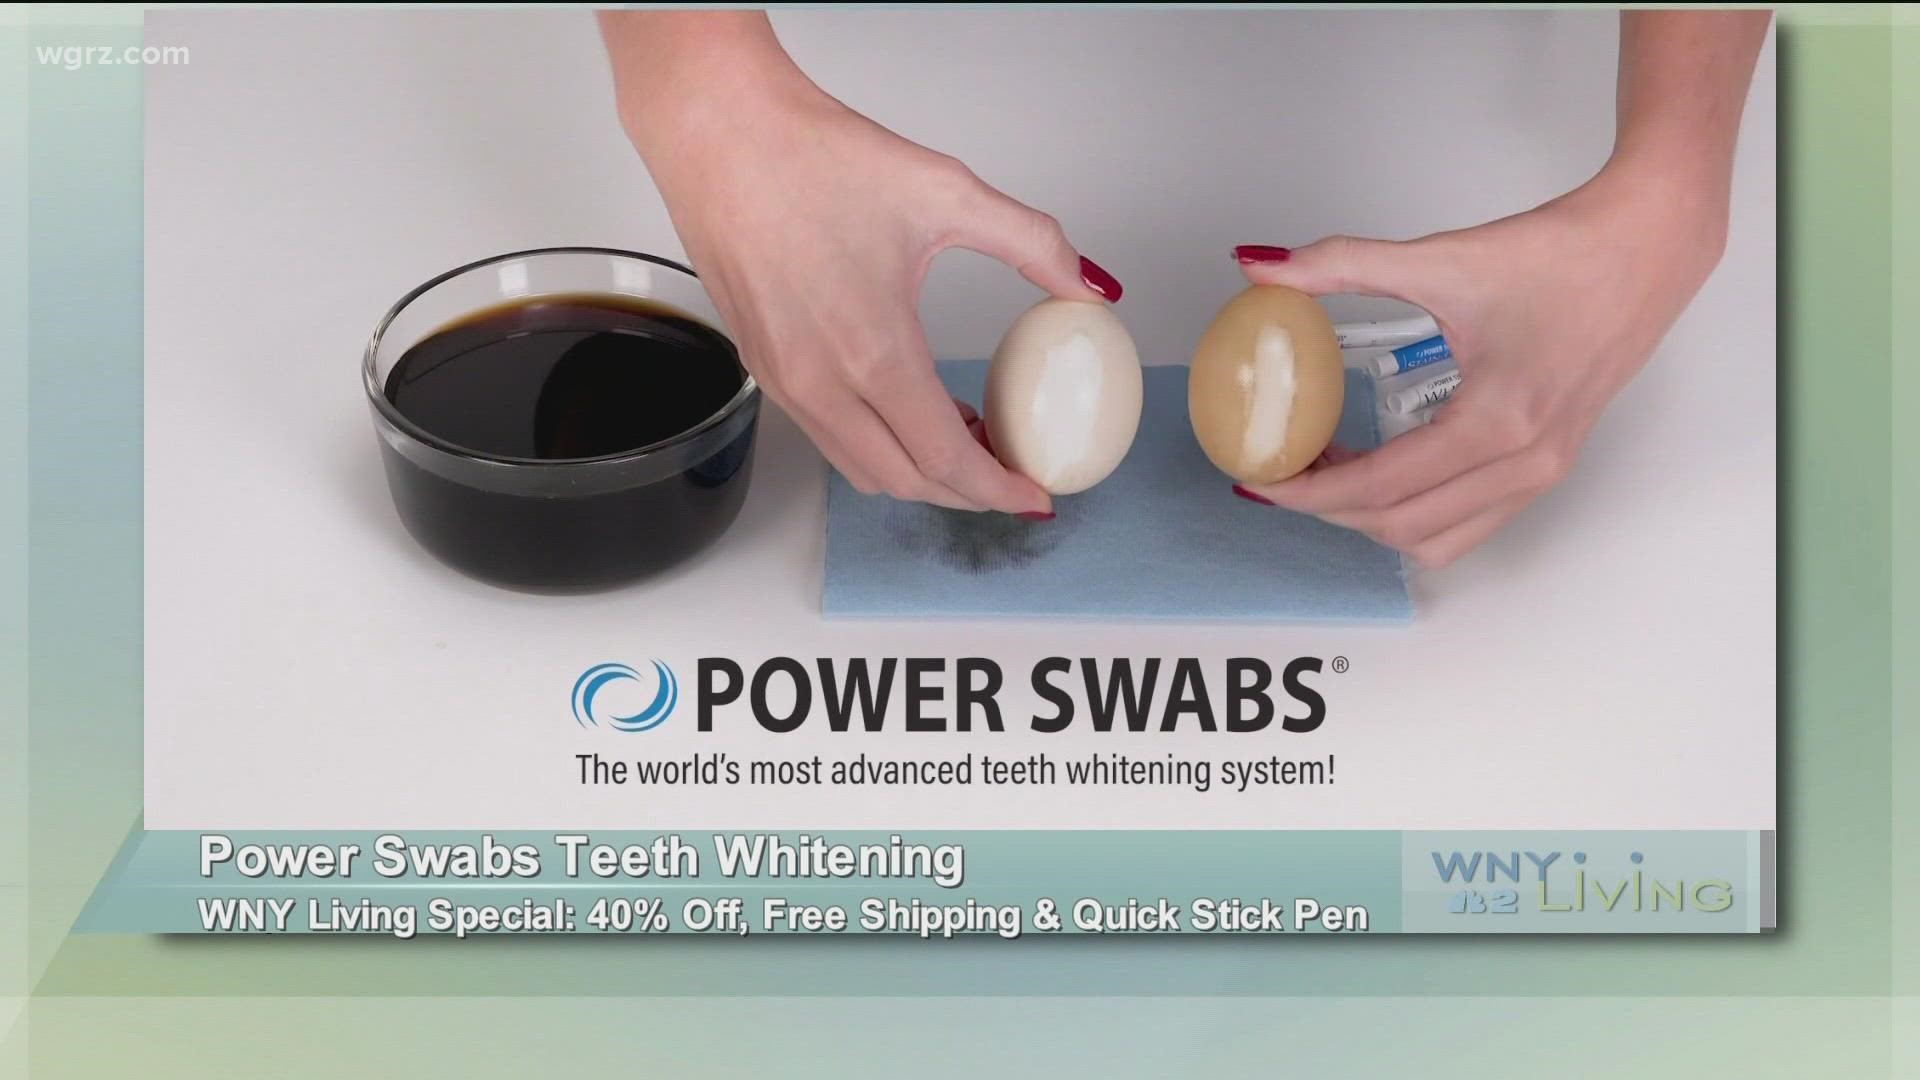 WNY Living - October 9 - Power Swabs Teeth Whitening (THIS VIDEO IS SPONSORED BY POWER SWABS TEETH WHITENING